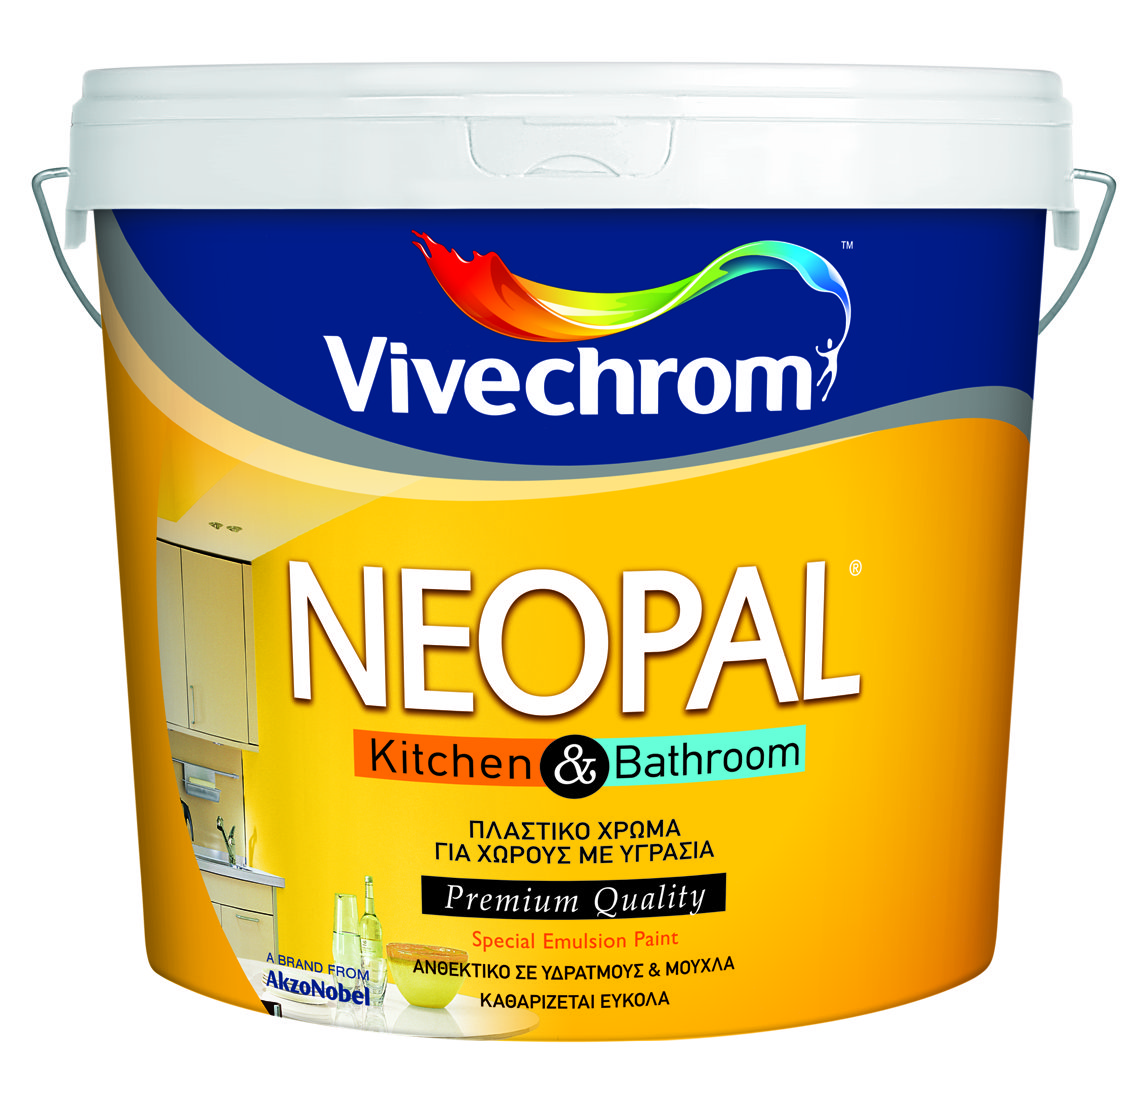 Vivechrom Neopal Kitchen & Bathroom Αντιμικροβιακό Χρώμα για Χώρους με Υγρασία Βάση P 3L